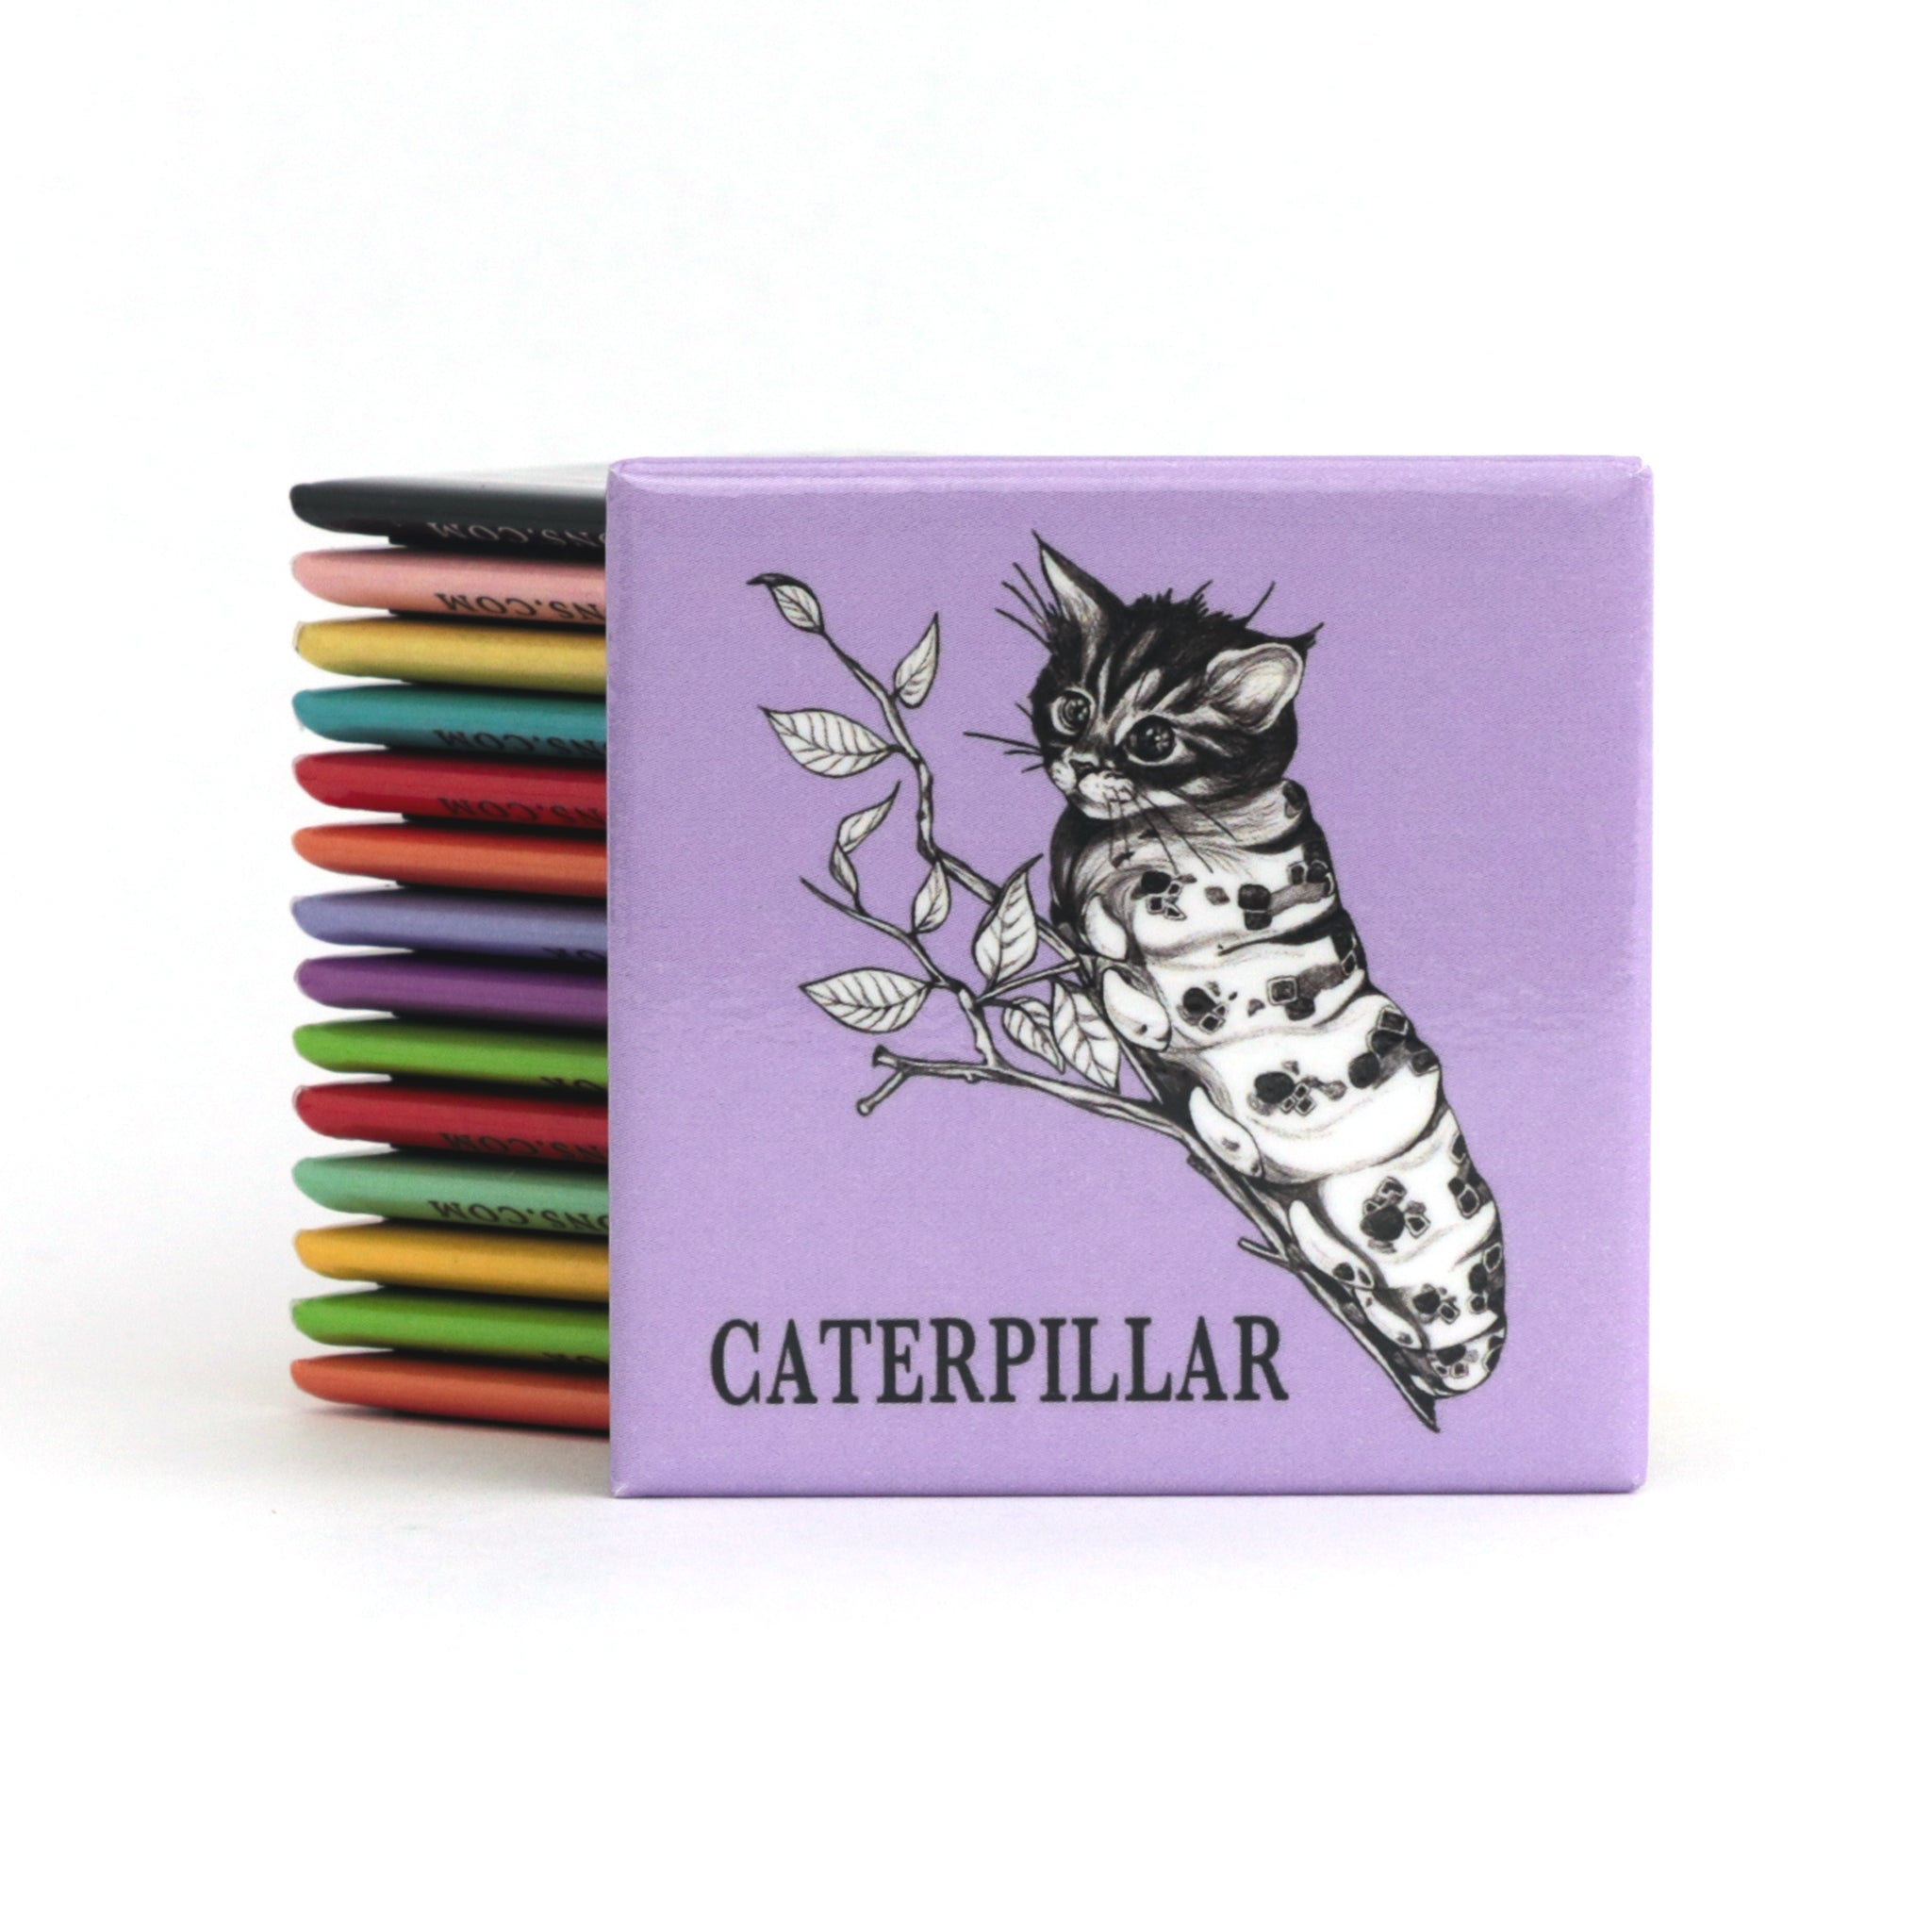 Caterpillar 2" Fridge Magnet